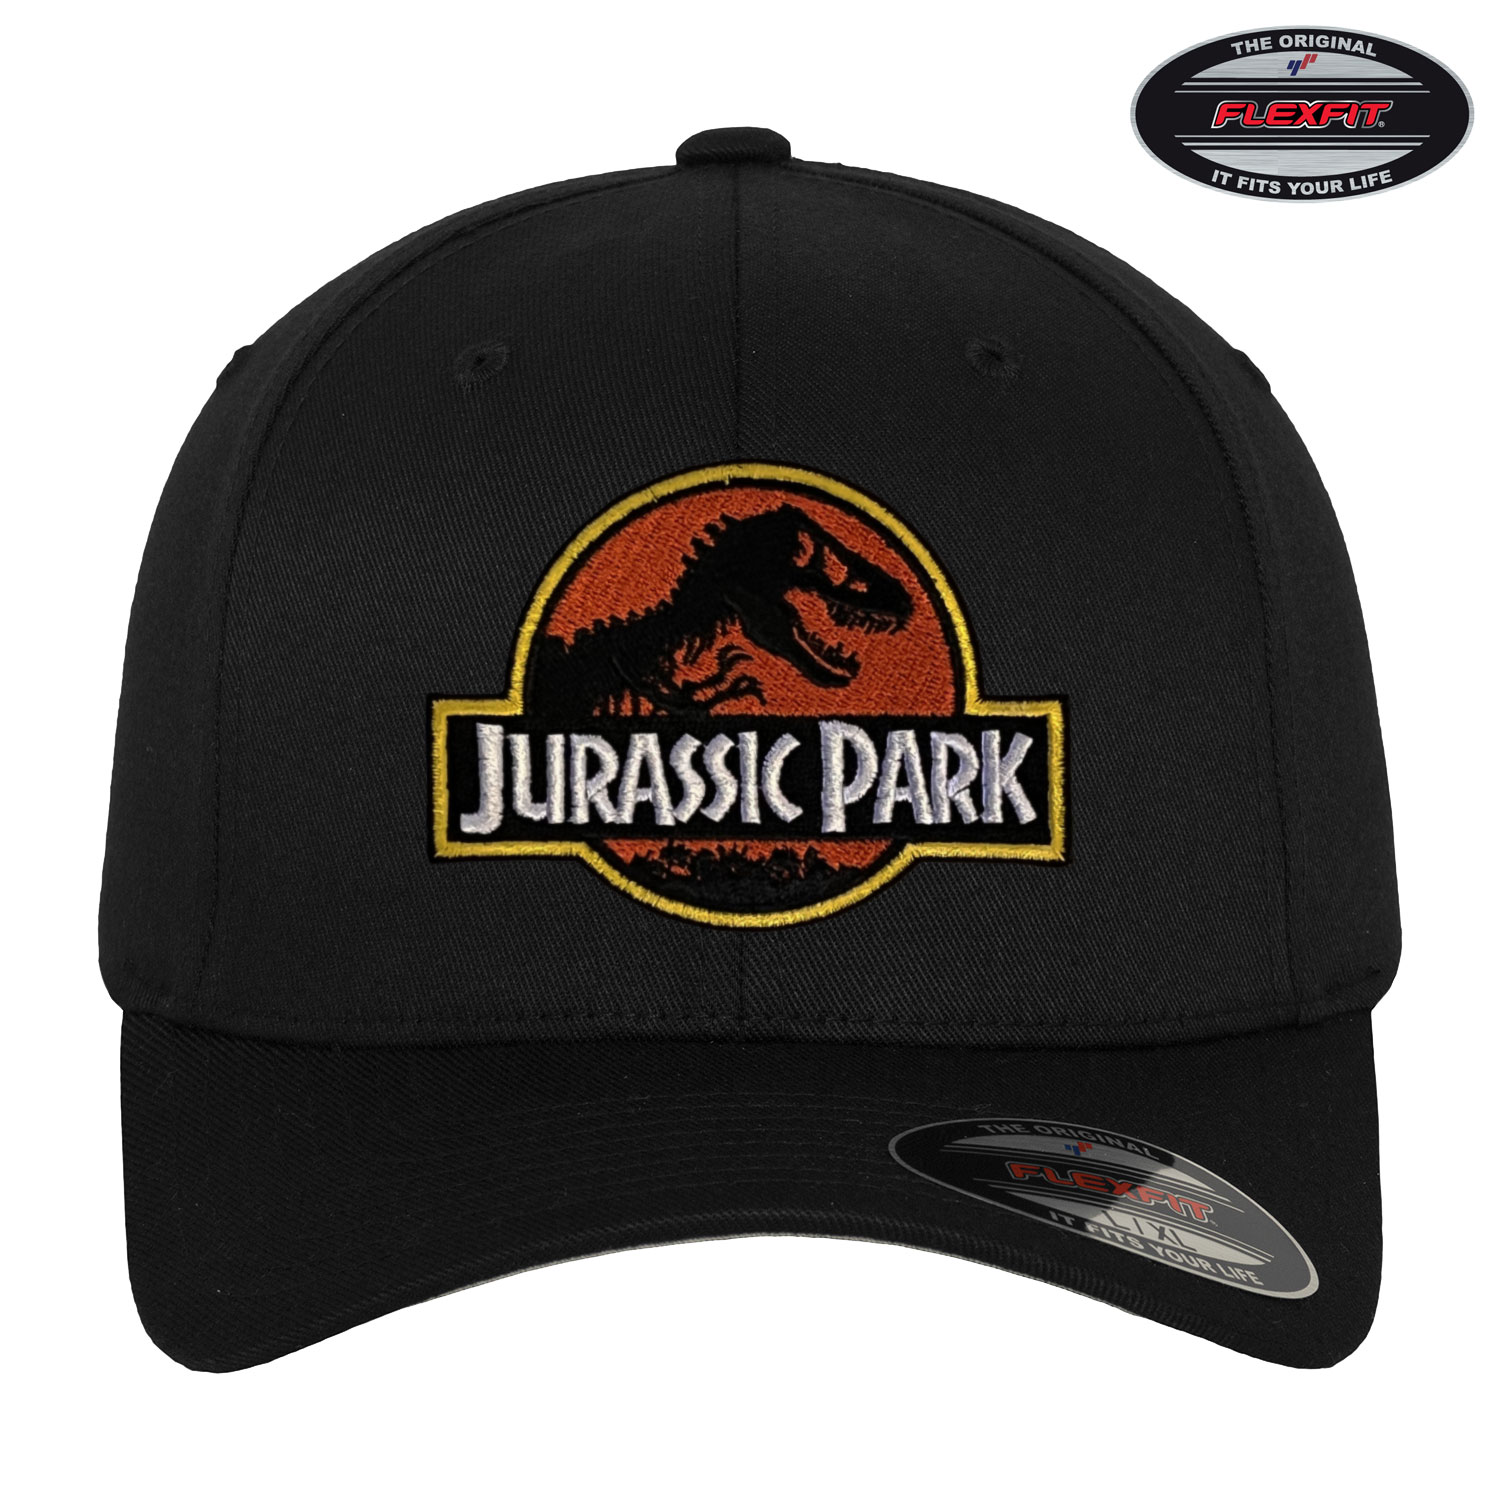 Jurassic Park Patch Baseball Cap